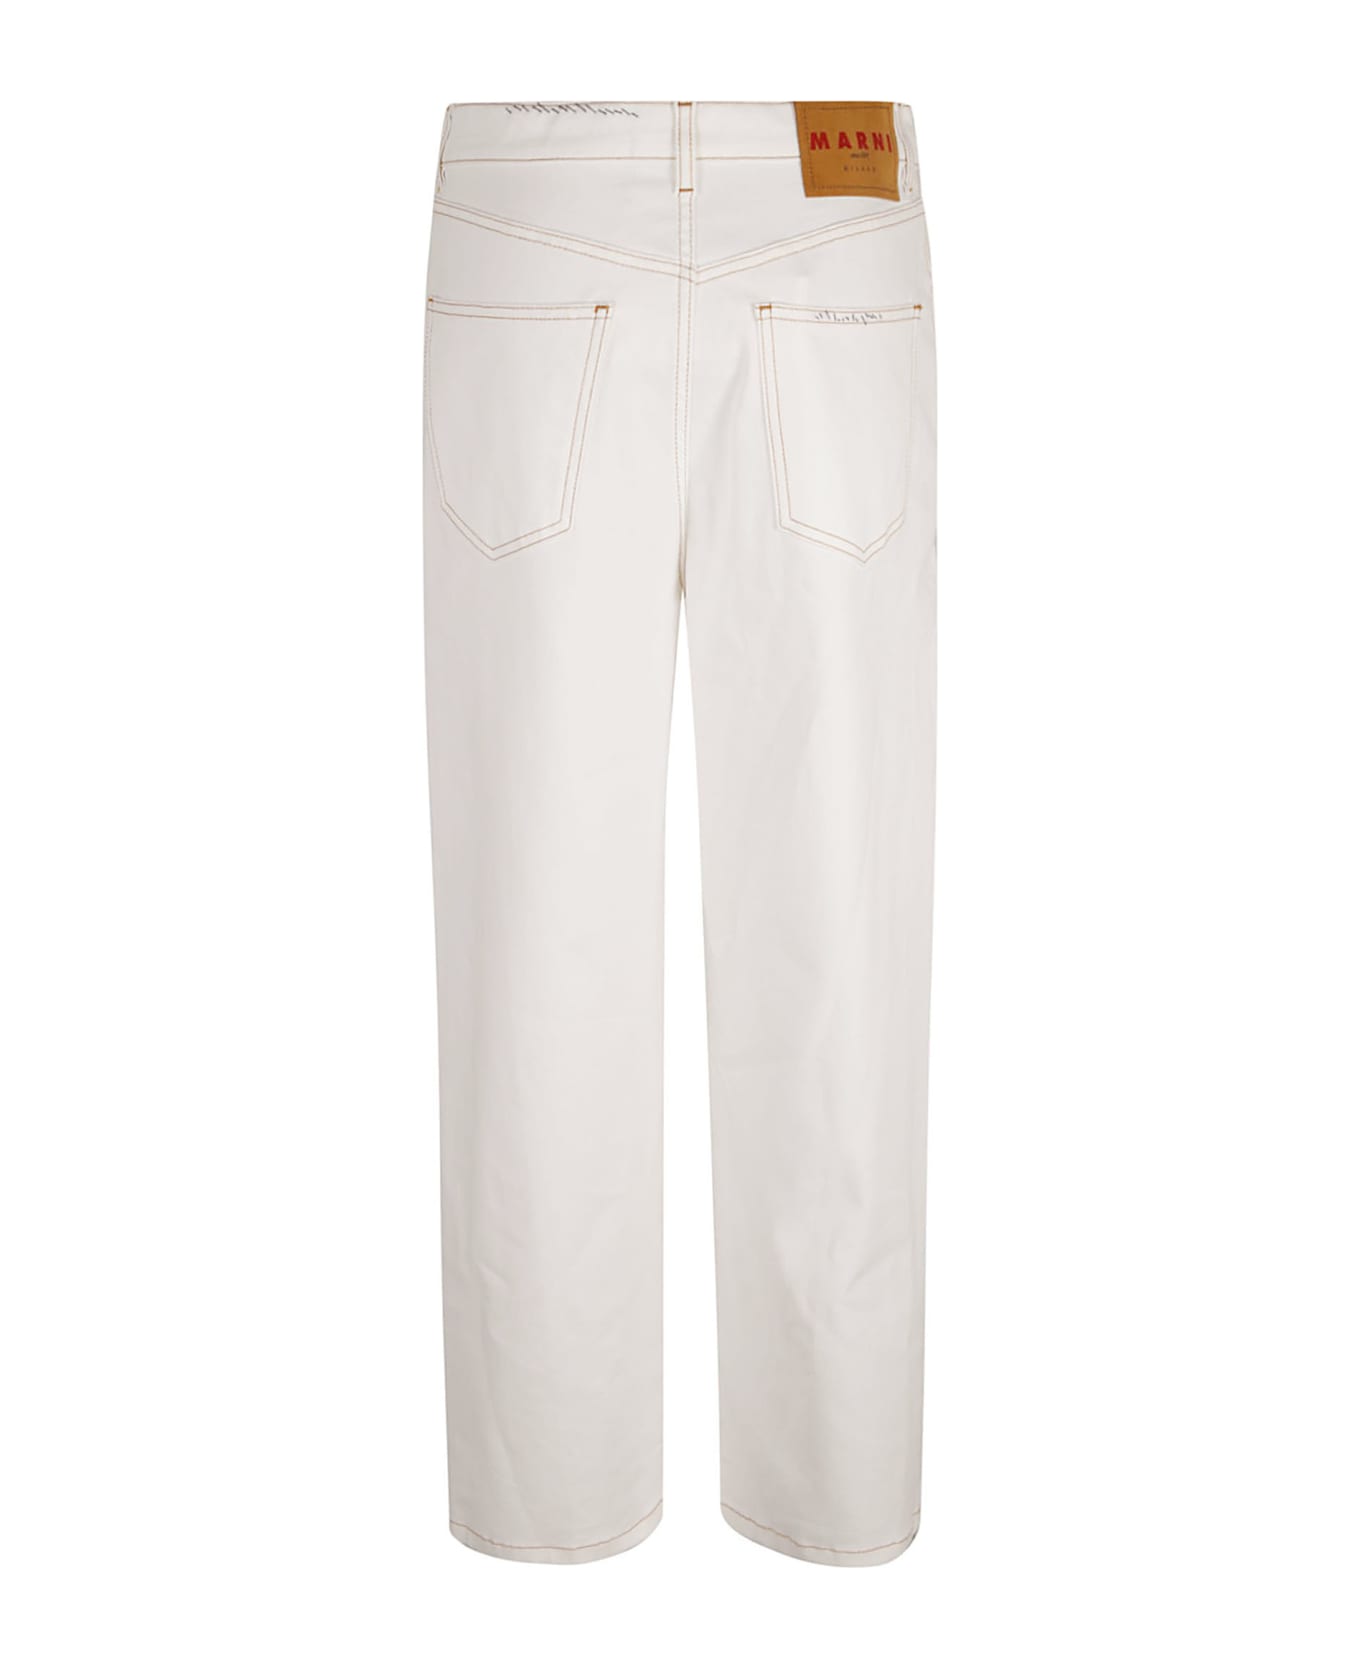 Marni Lightweight Stretch Denim Jeans - Lily White